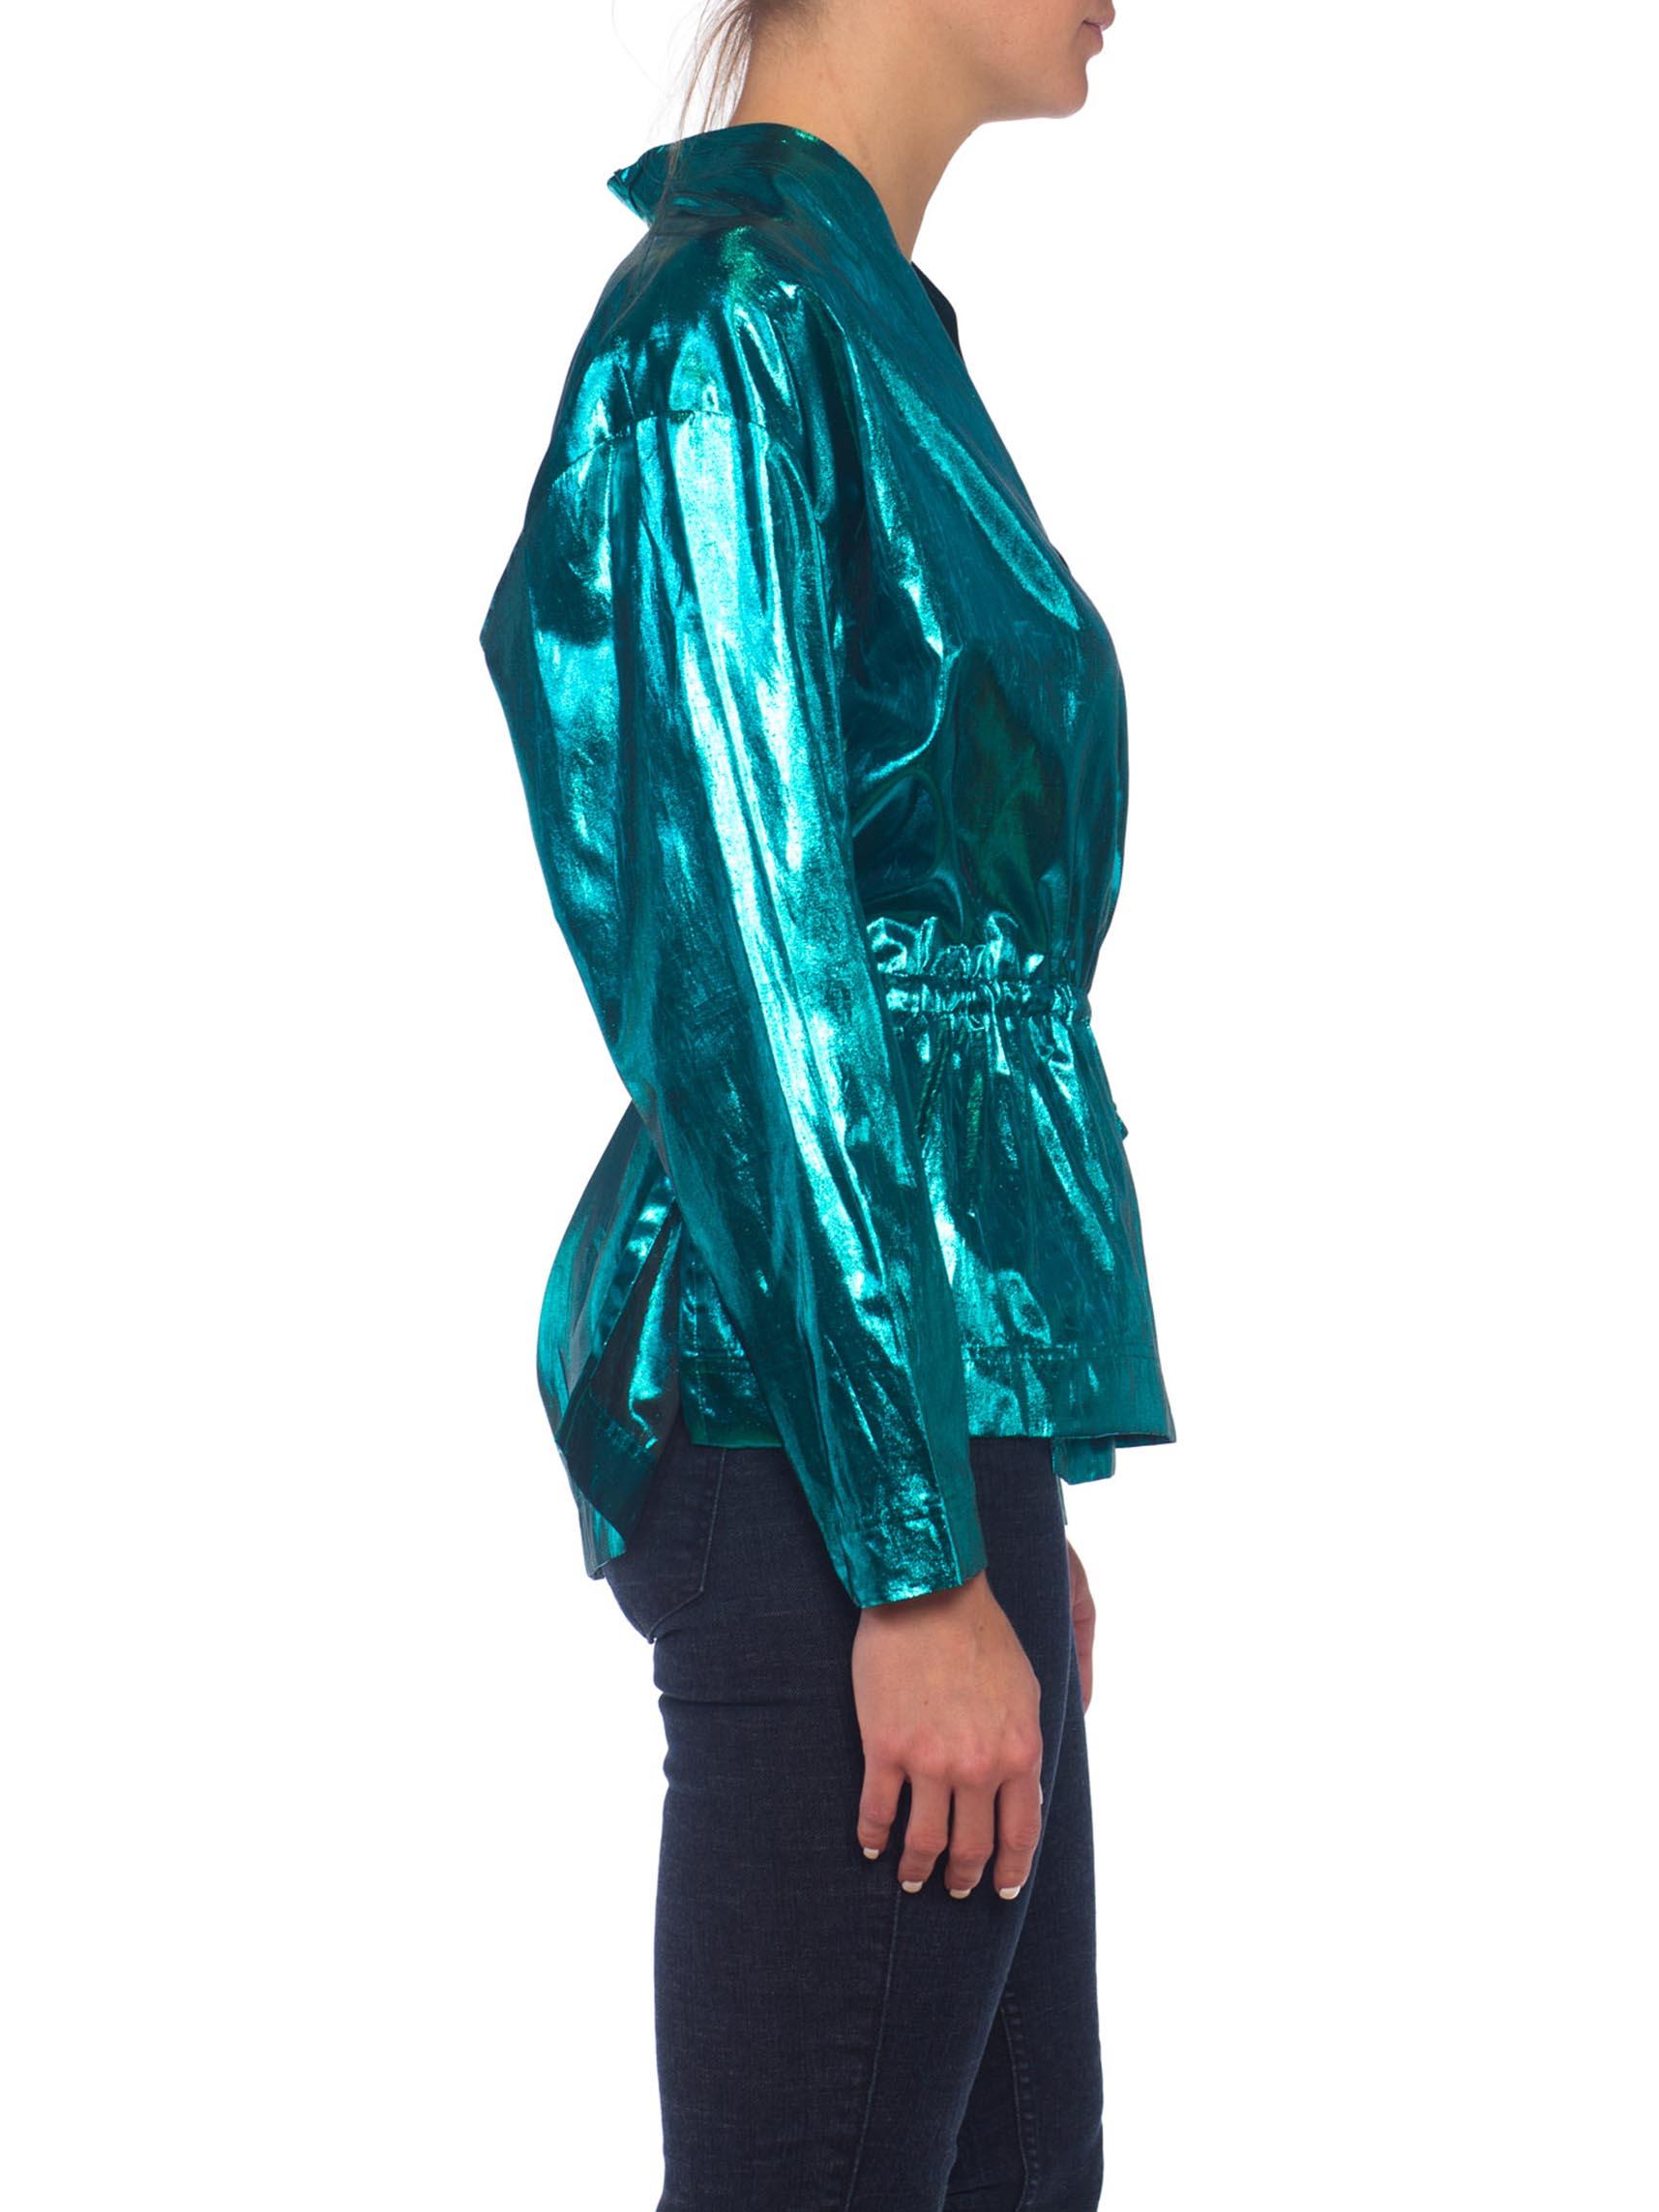 Women's 1980S Teal Lamé Gucci Style Disco Wrap Top